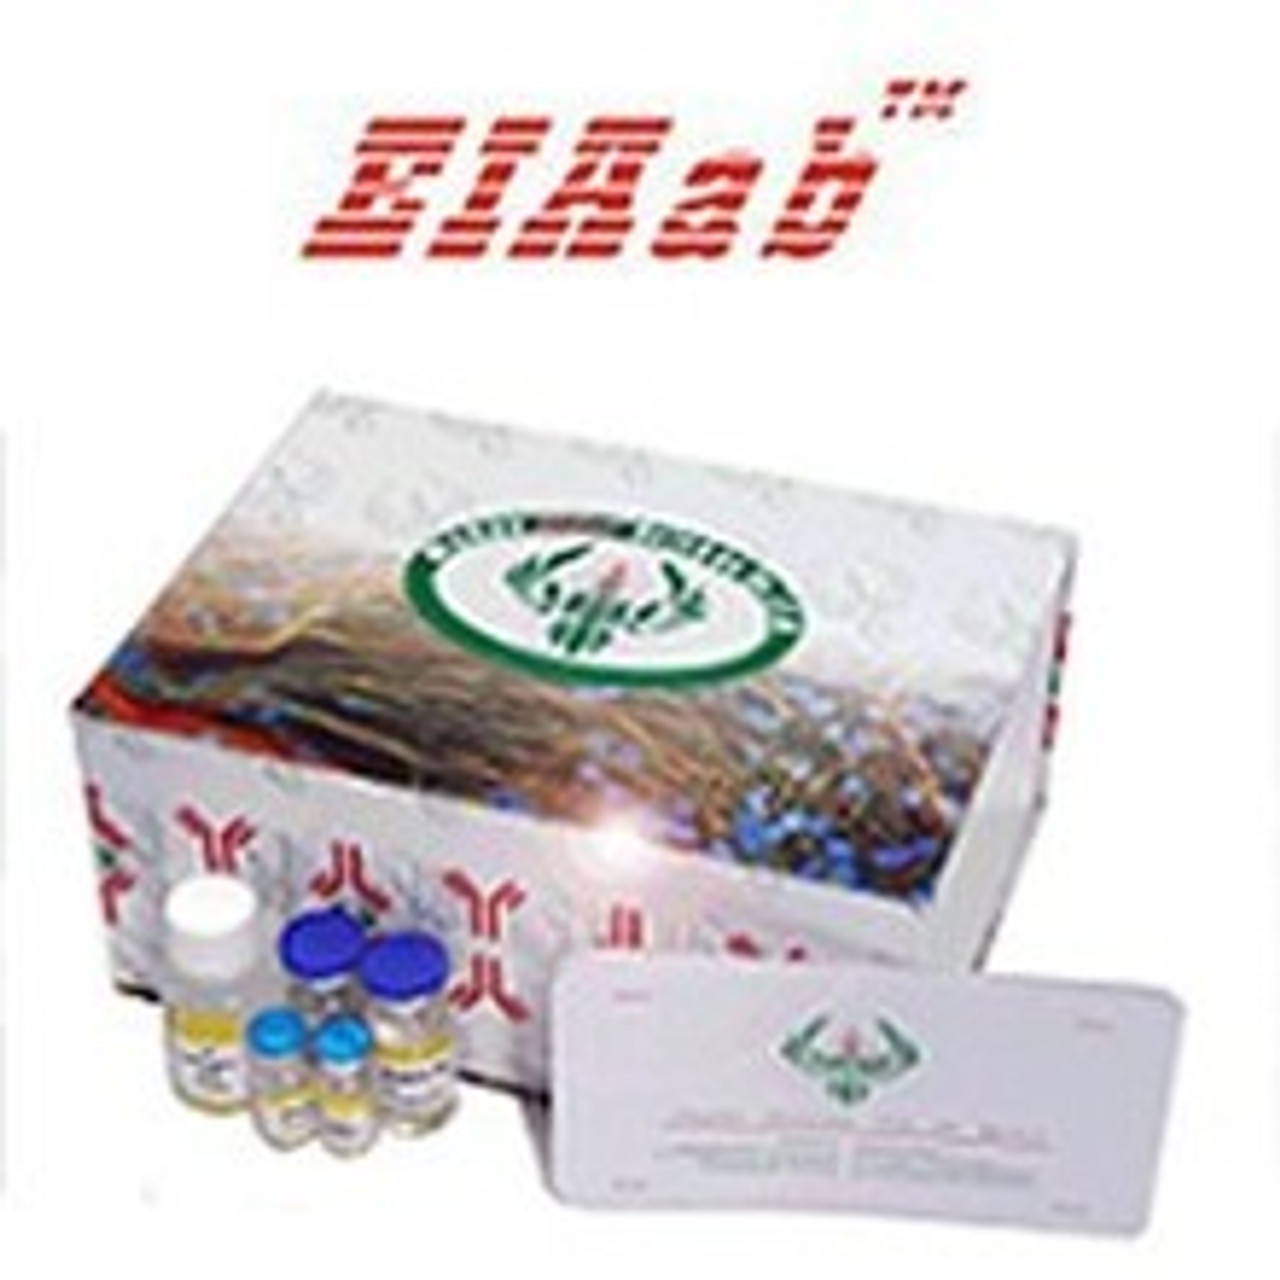 Rat Lman1/Protein ERGIC-53 ELISA Kit